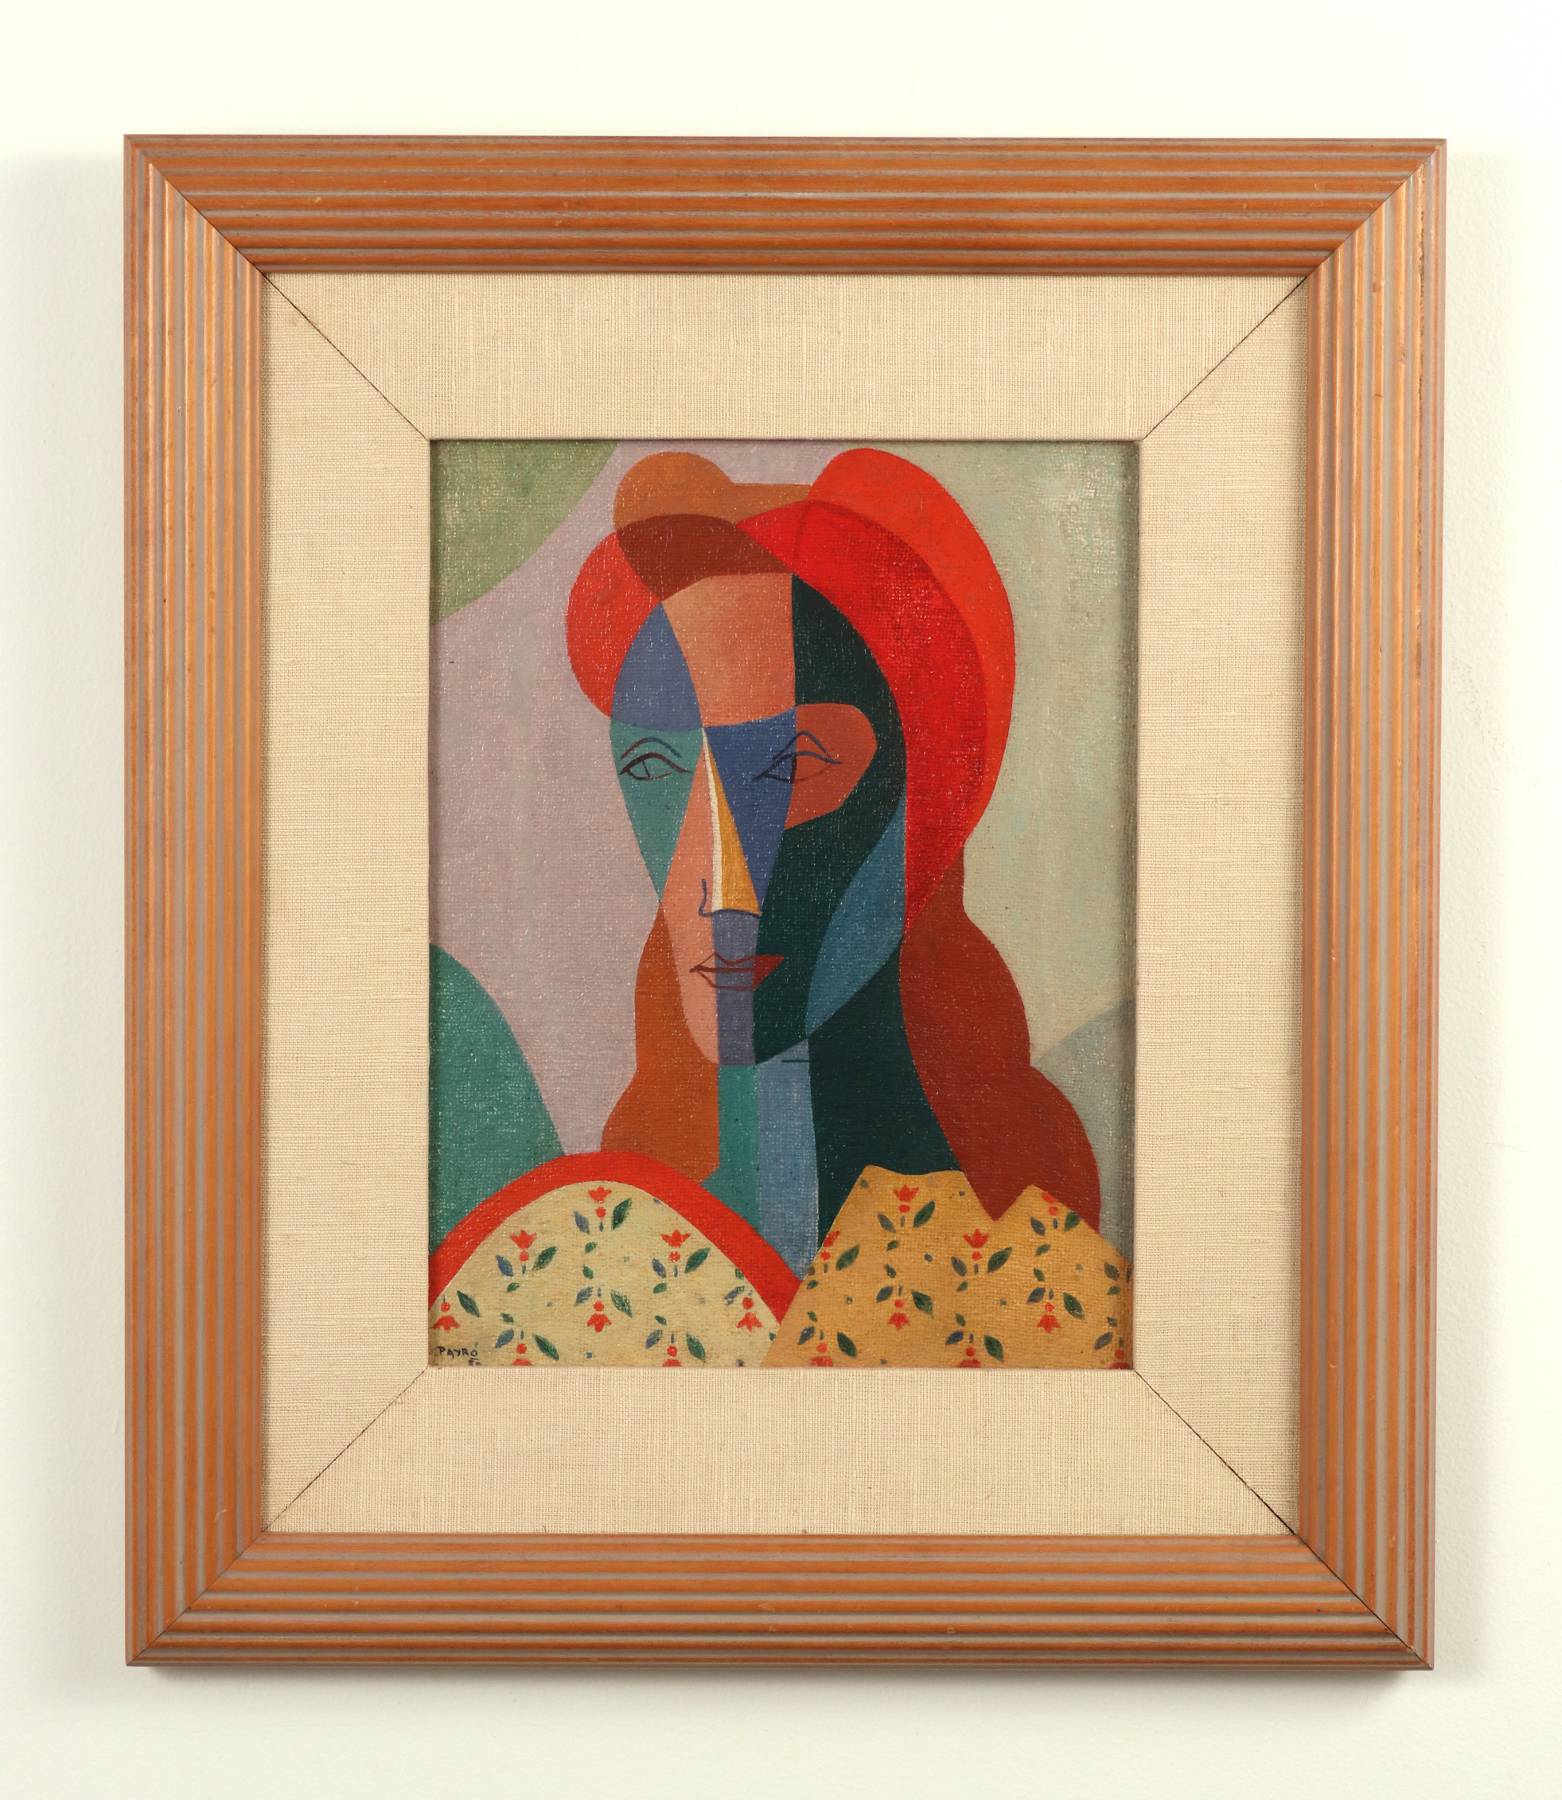 Julio Payro (1899-1971) "Portrait of a Woman", 1950